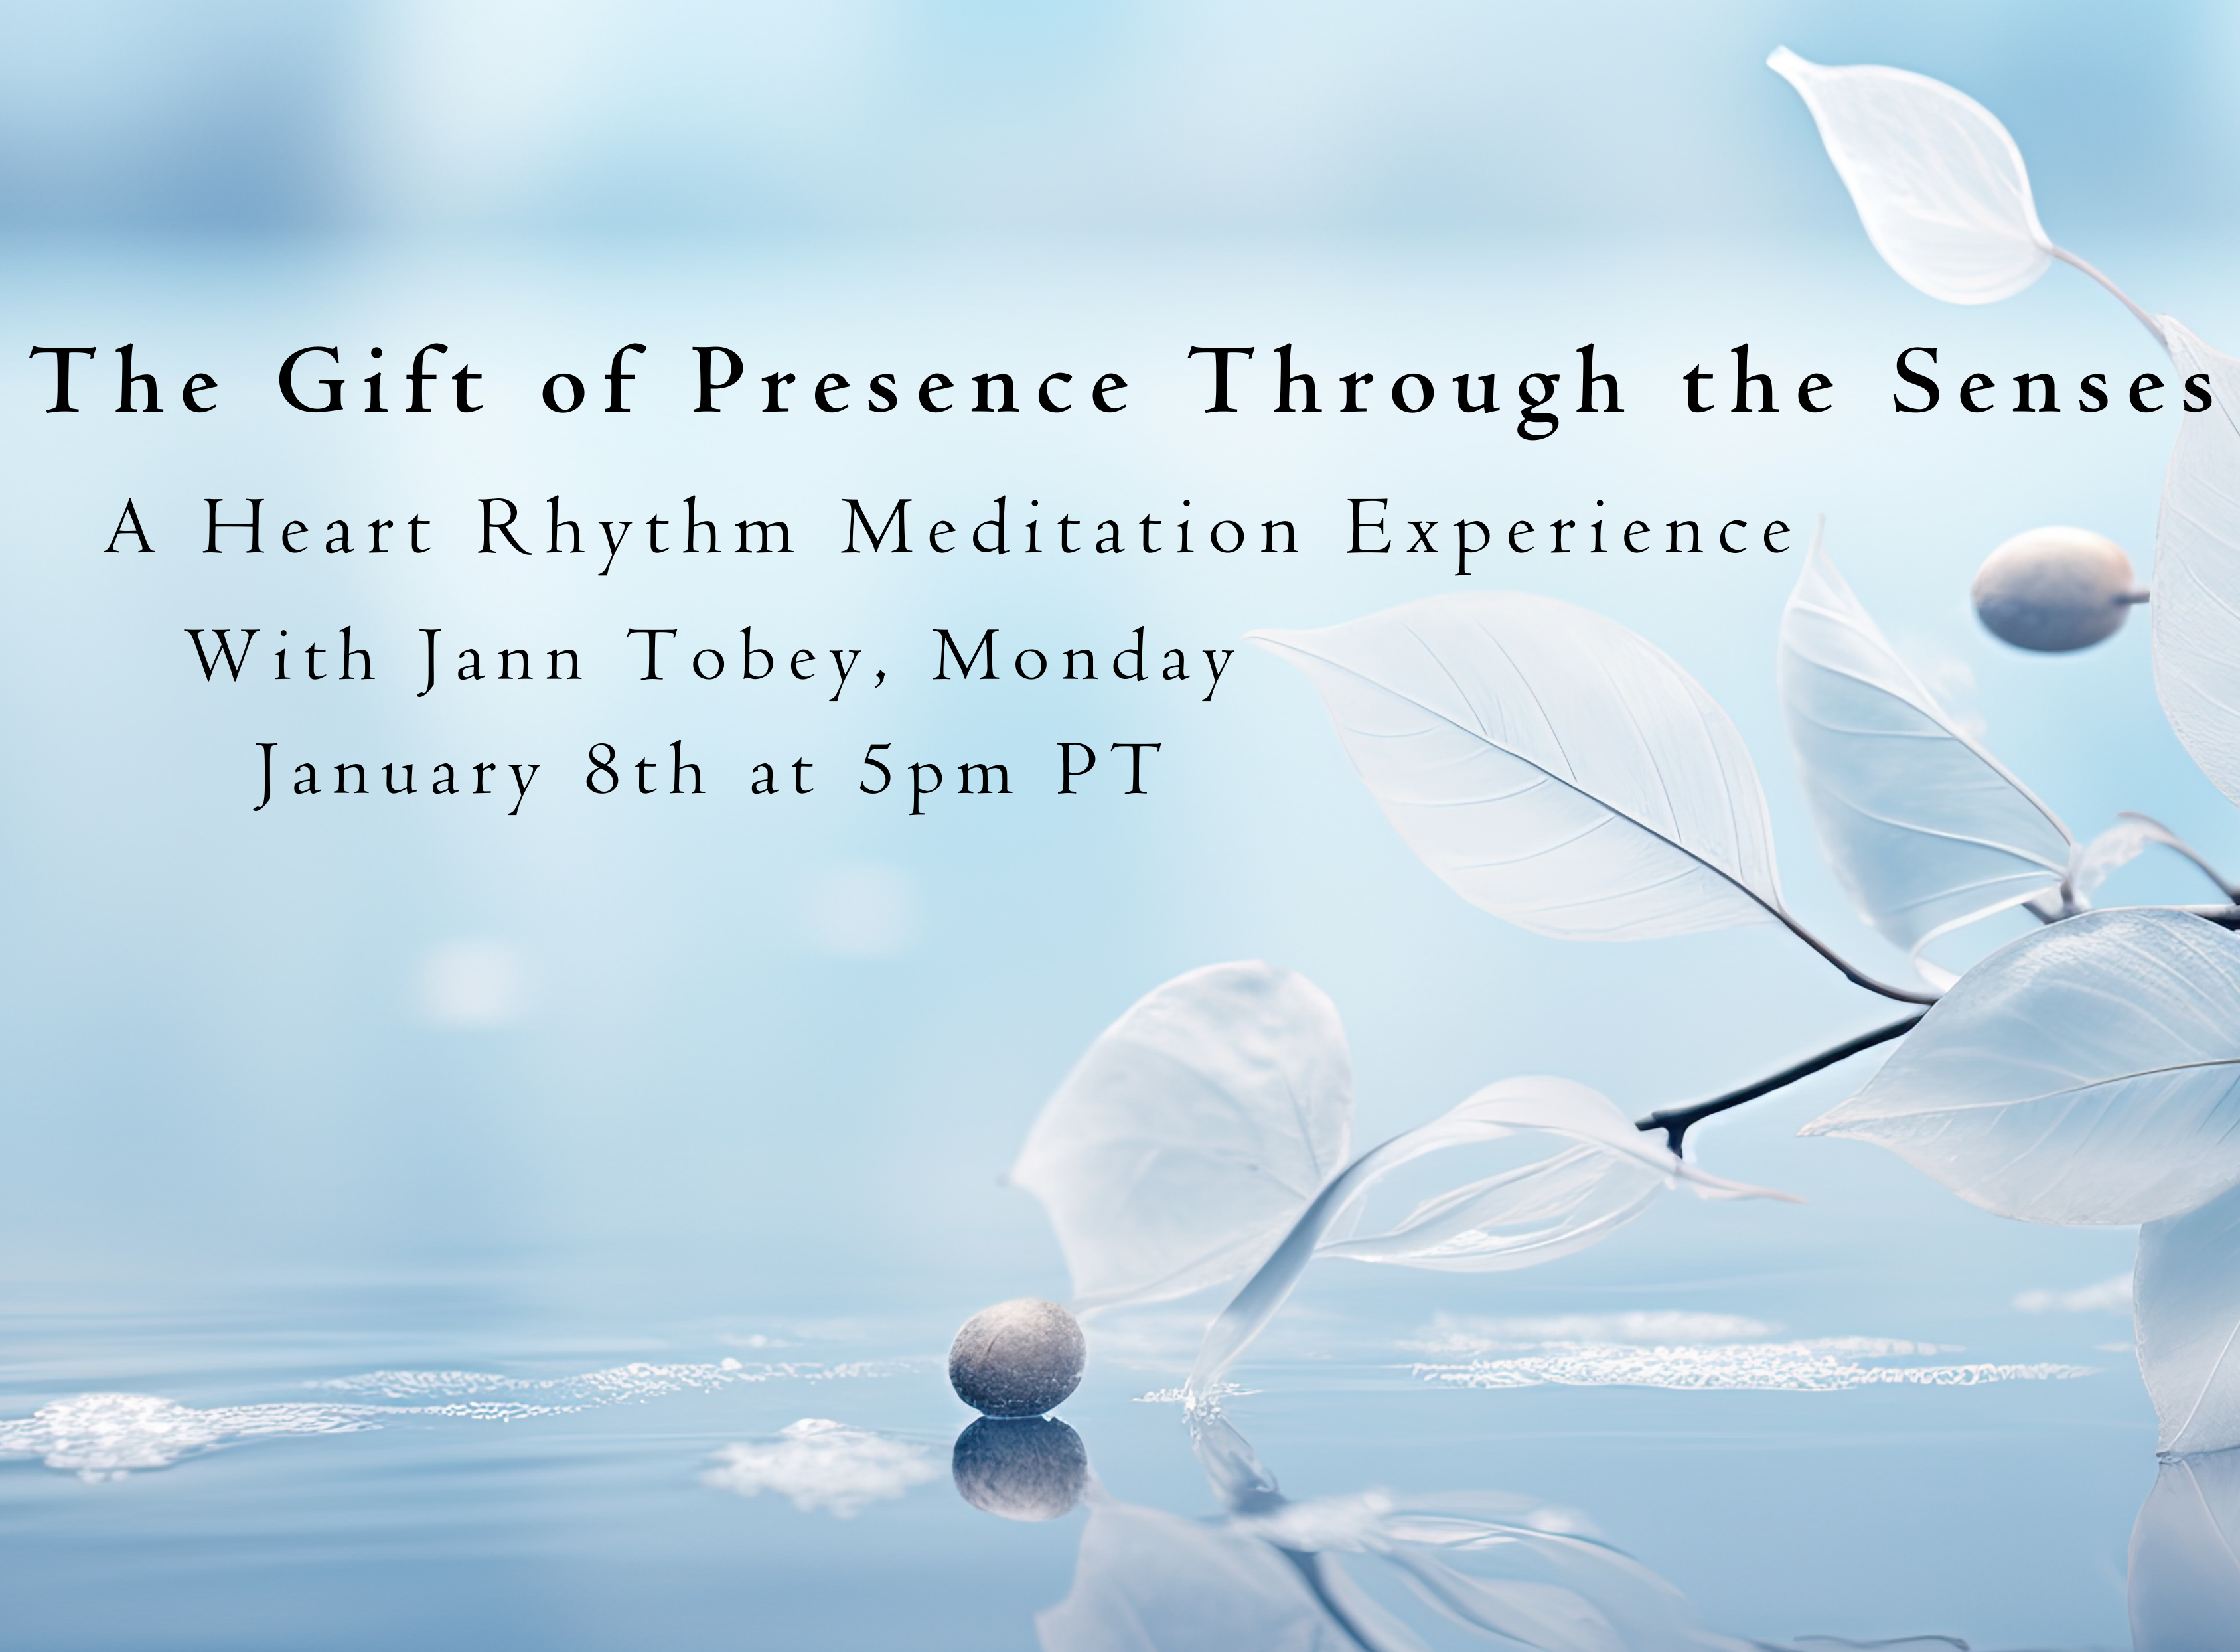 The Gift of Presence through the Senses